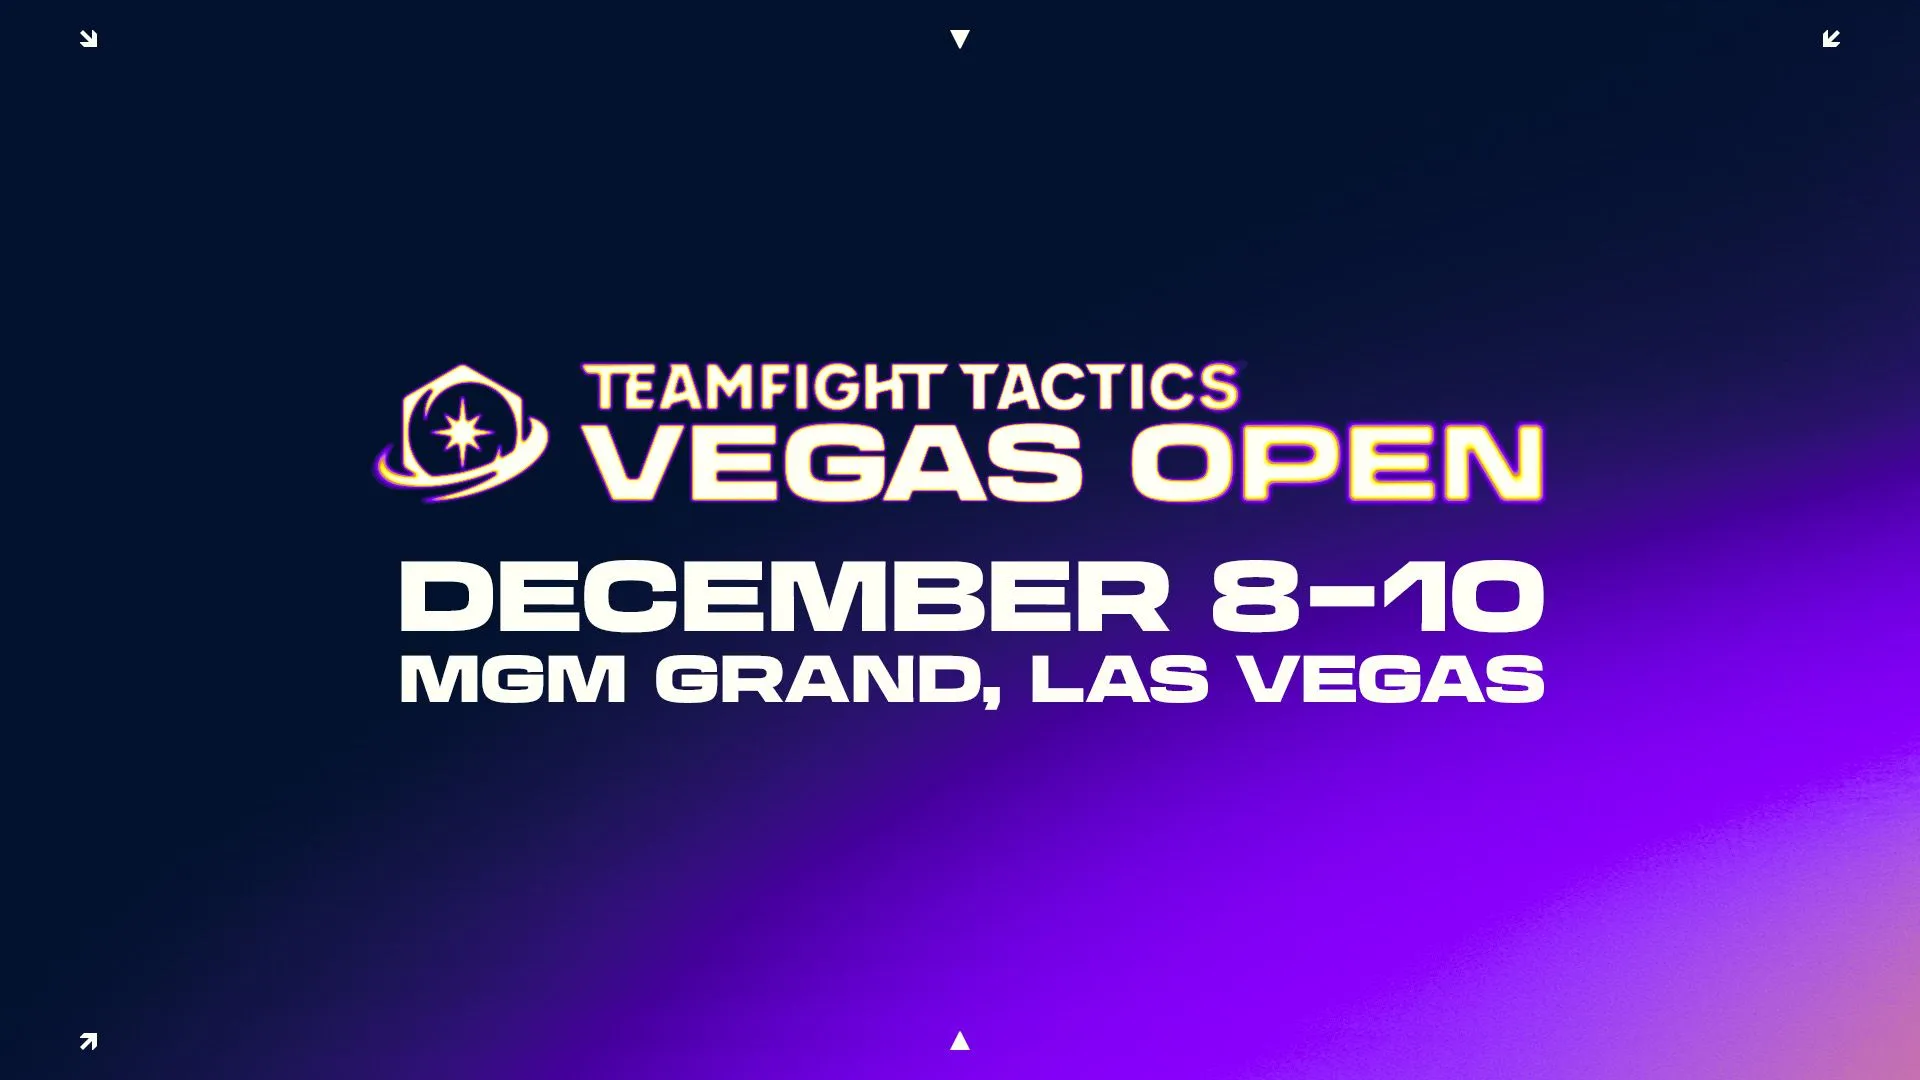 Imagen de las fechas del torneo TFT Vegas Open en Las Vegas